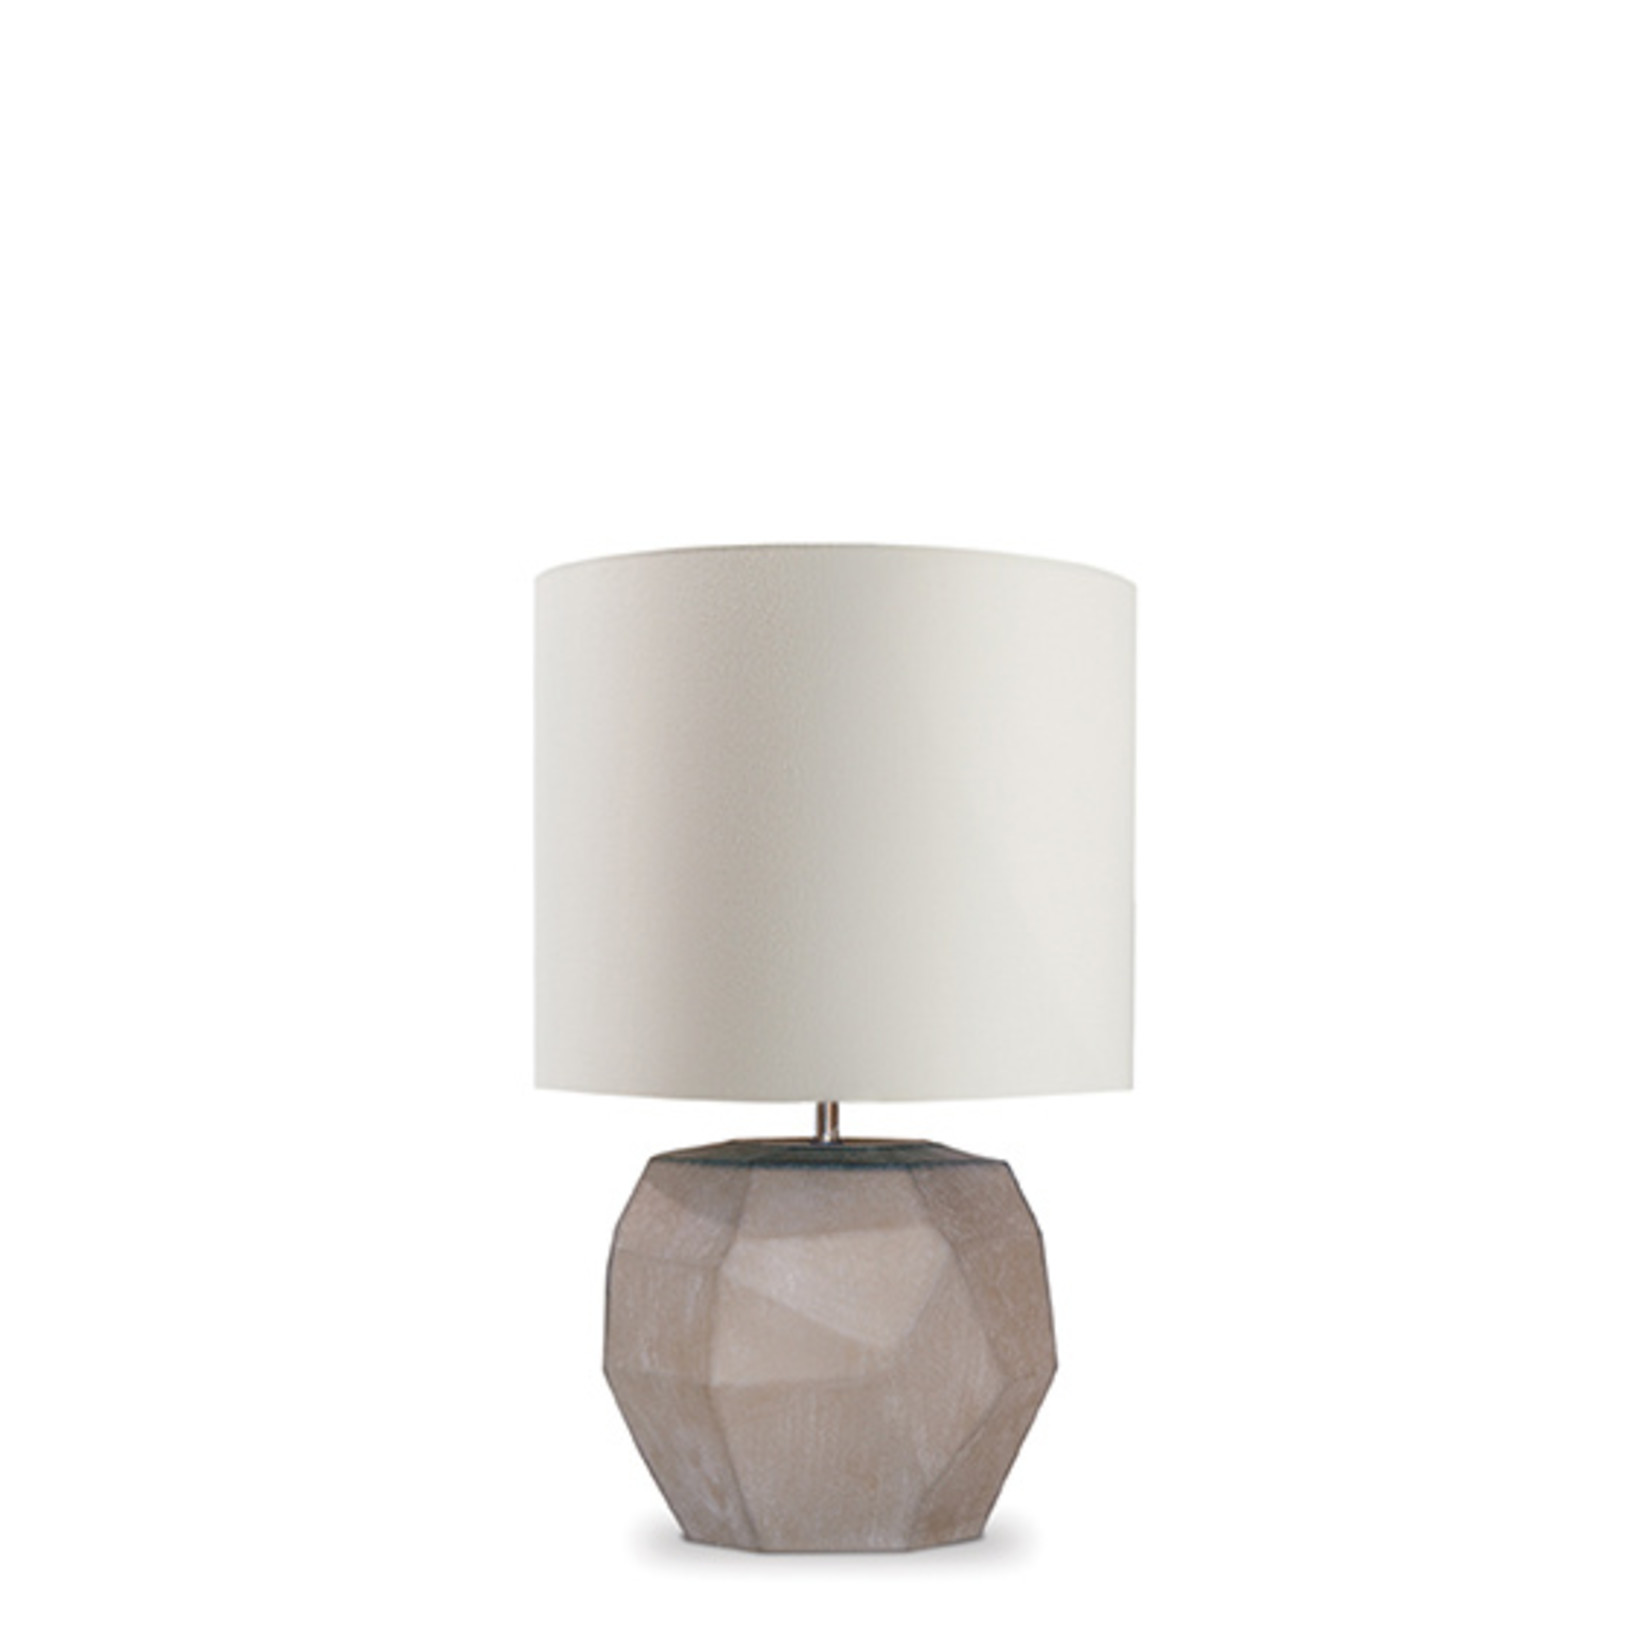 Guaxs Table lamp Cubistic Round | smoke grey